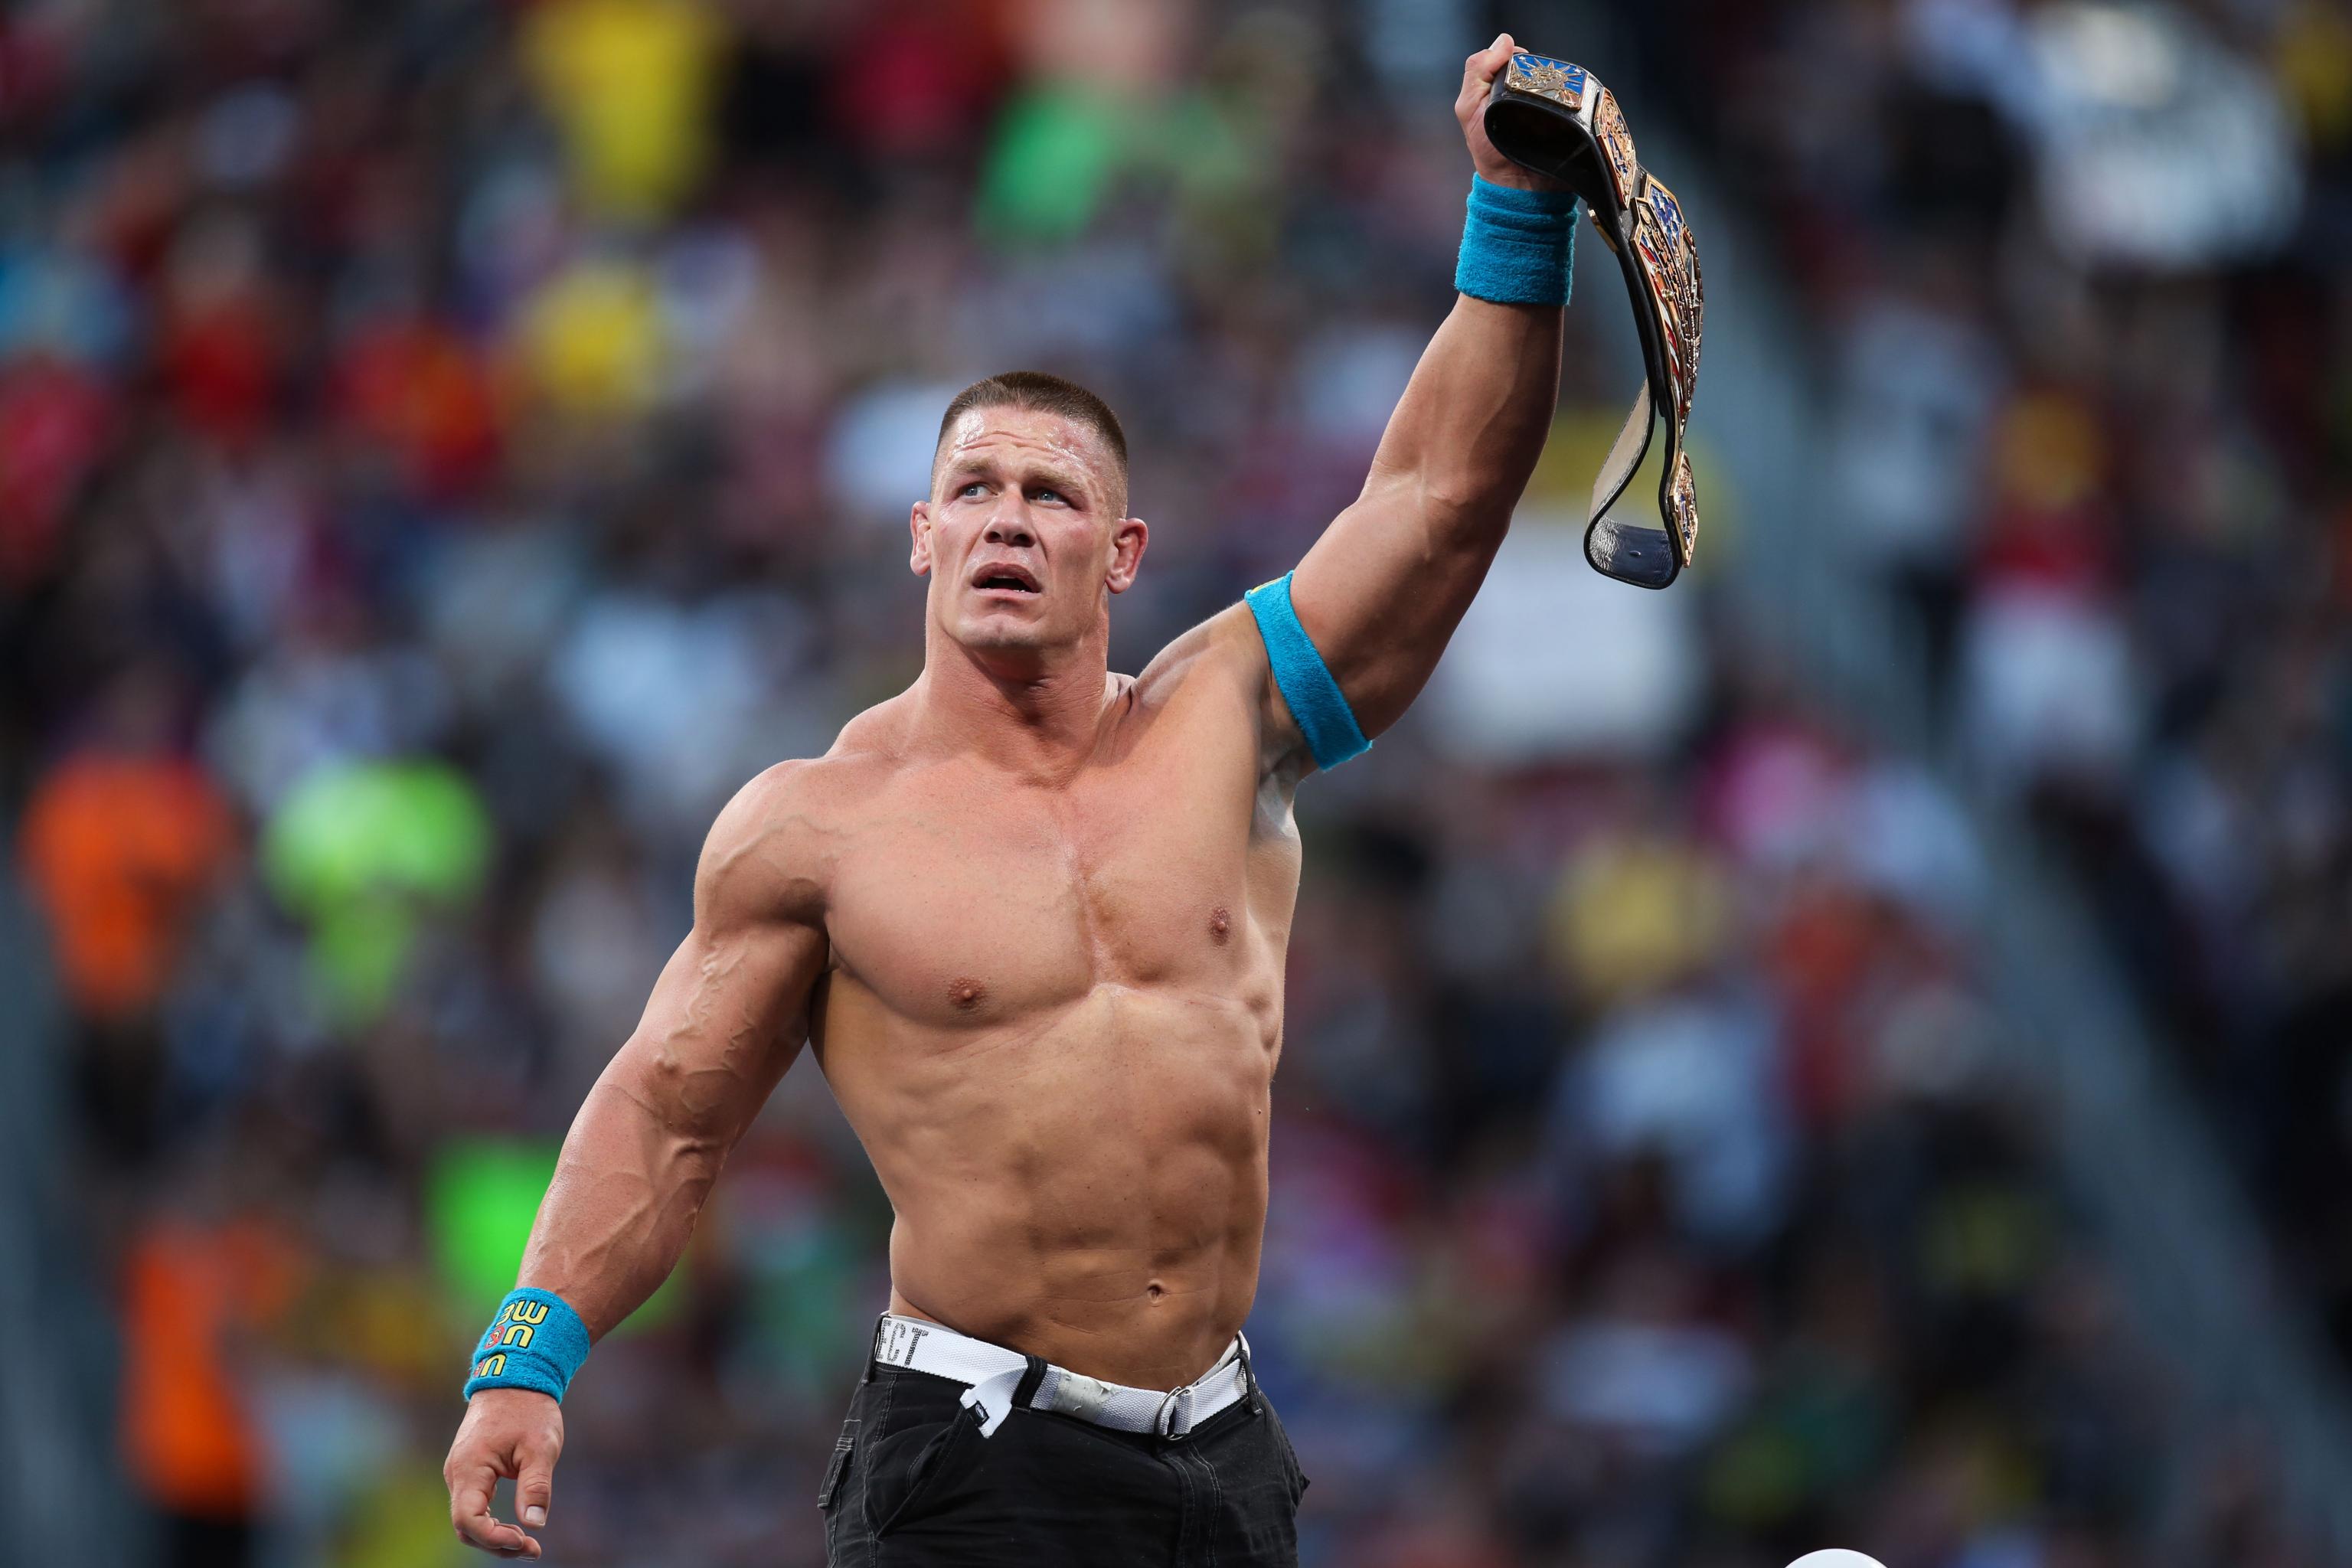 WWE Makes Shocking Announcement Before John Cena's Return